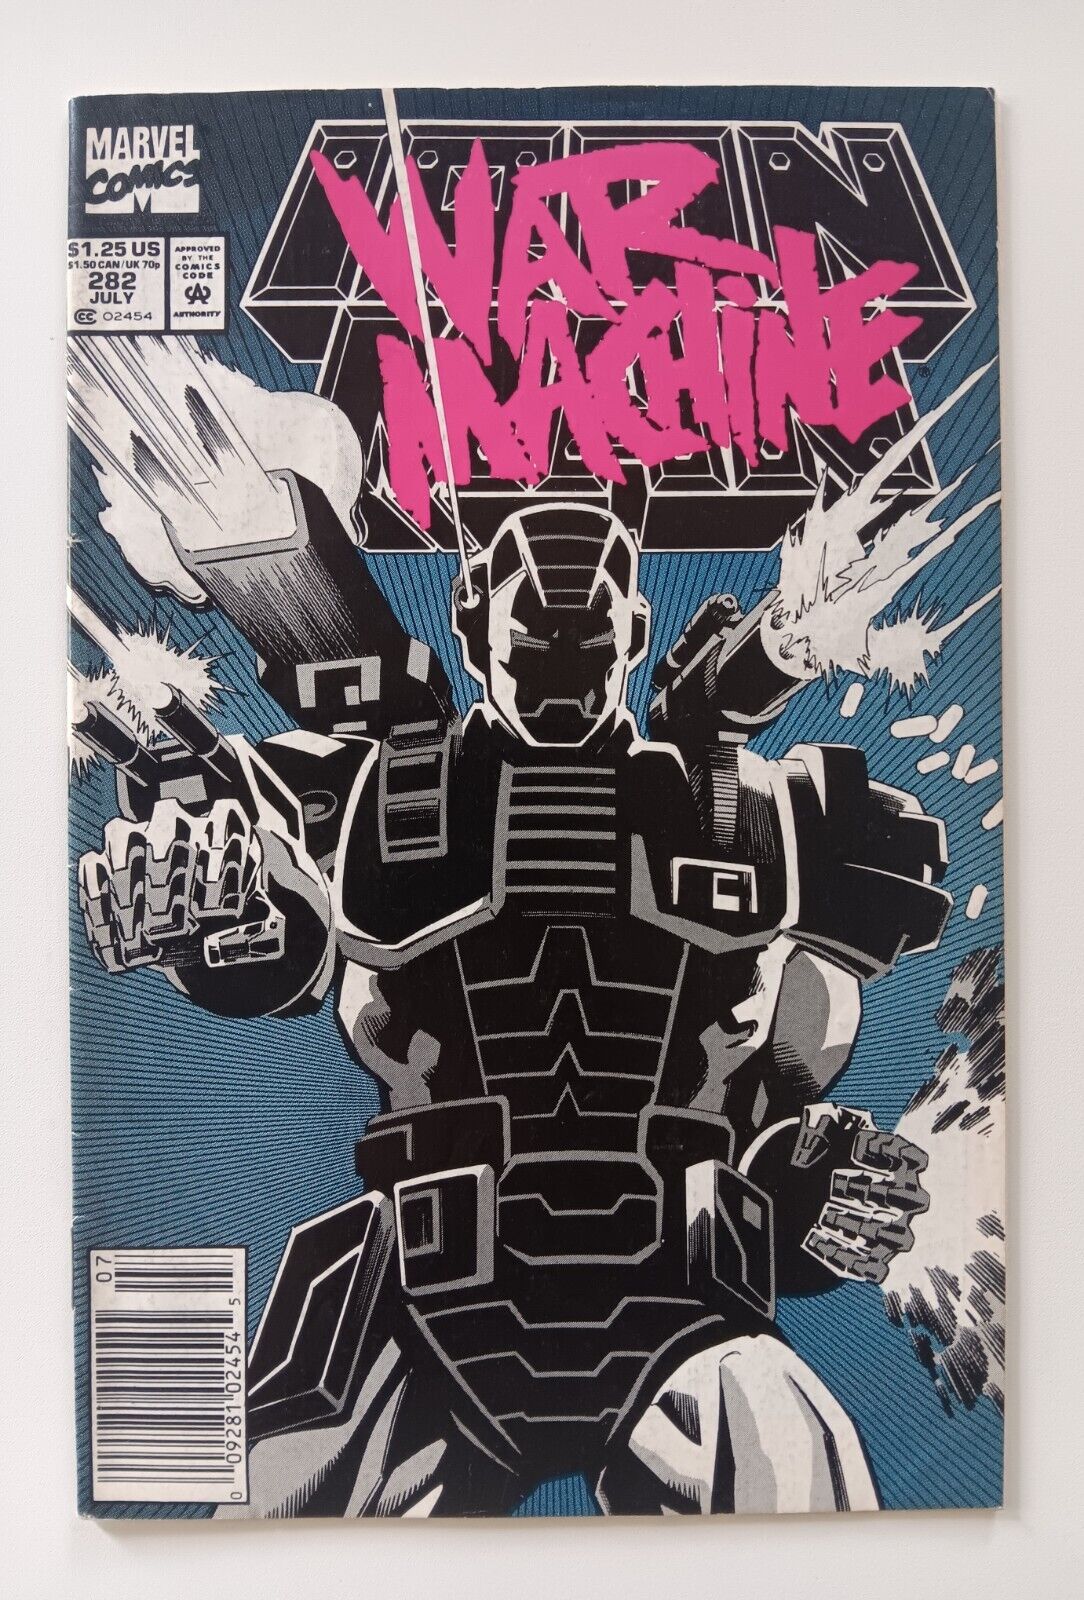 IRON MAN #282 (Marvel, July 1992) 1st Appearance of War Machine - RARE NEWSSTAND